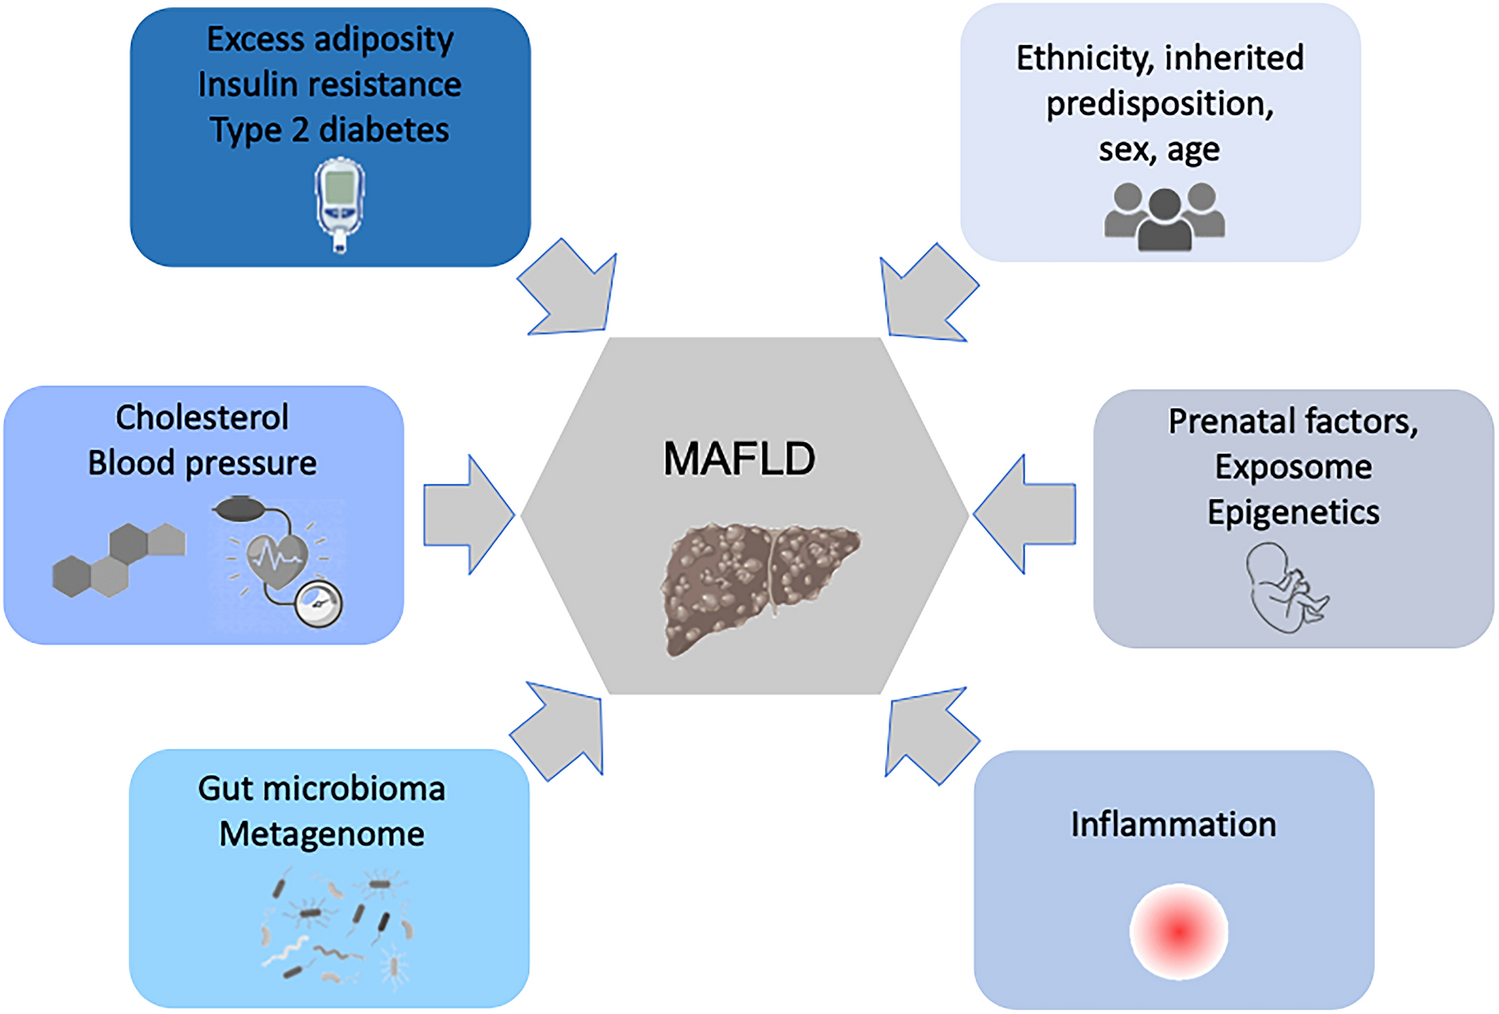 The contribution of genetics and epigenetics to MAFLD susceptibility